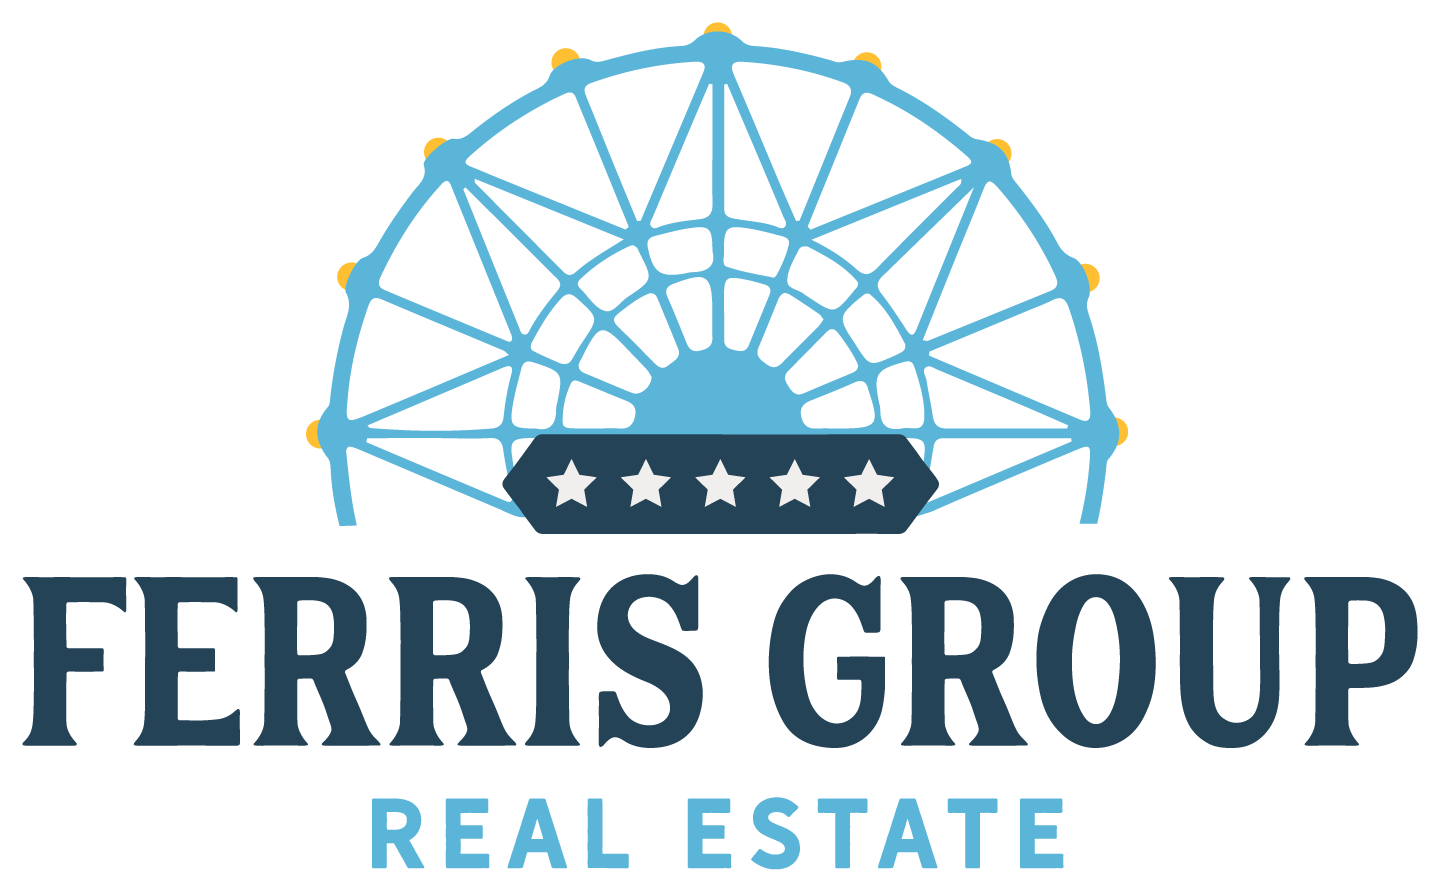 Ferris Group Real Estate